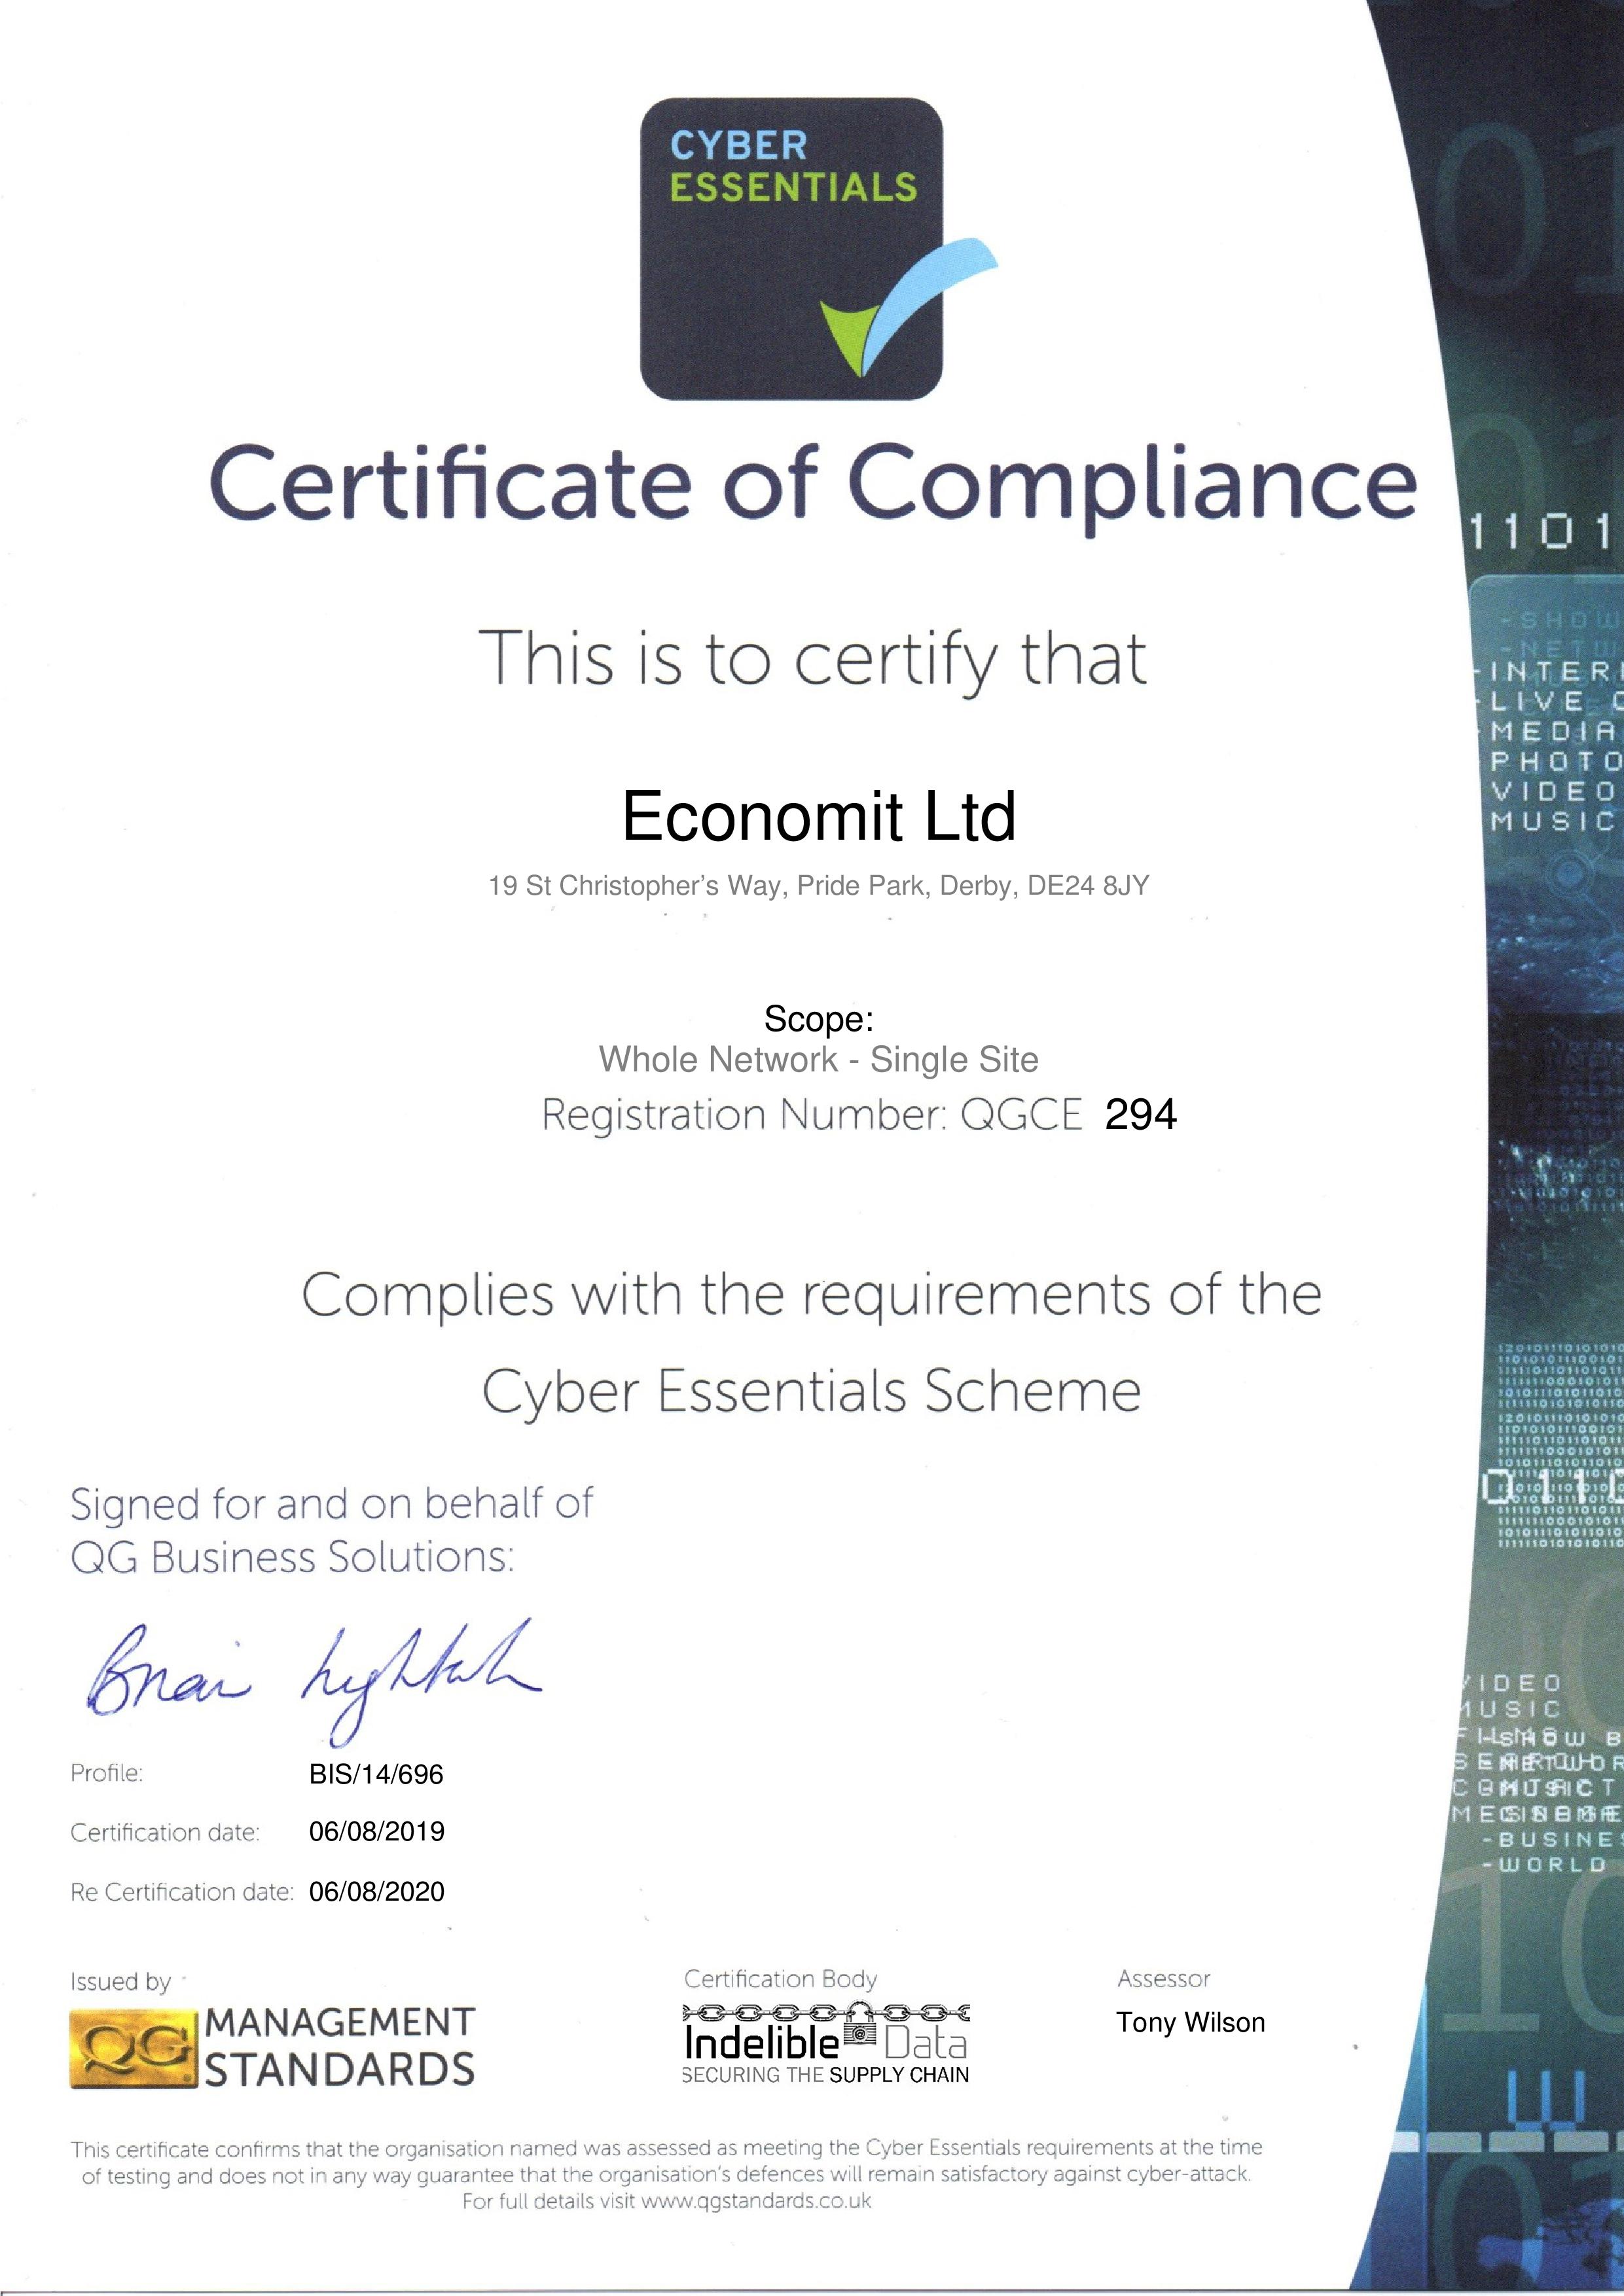 QGCE294 Economit Ltd